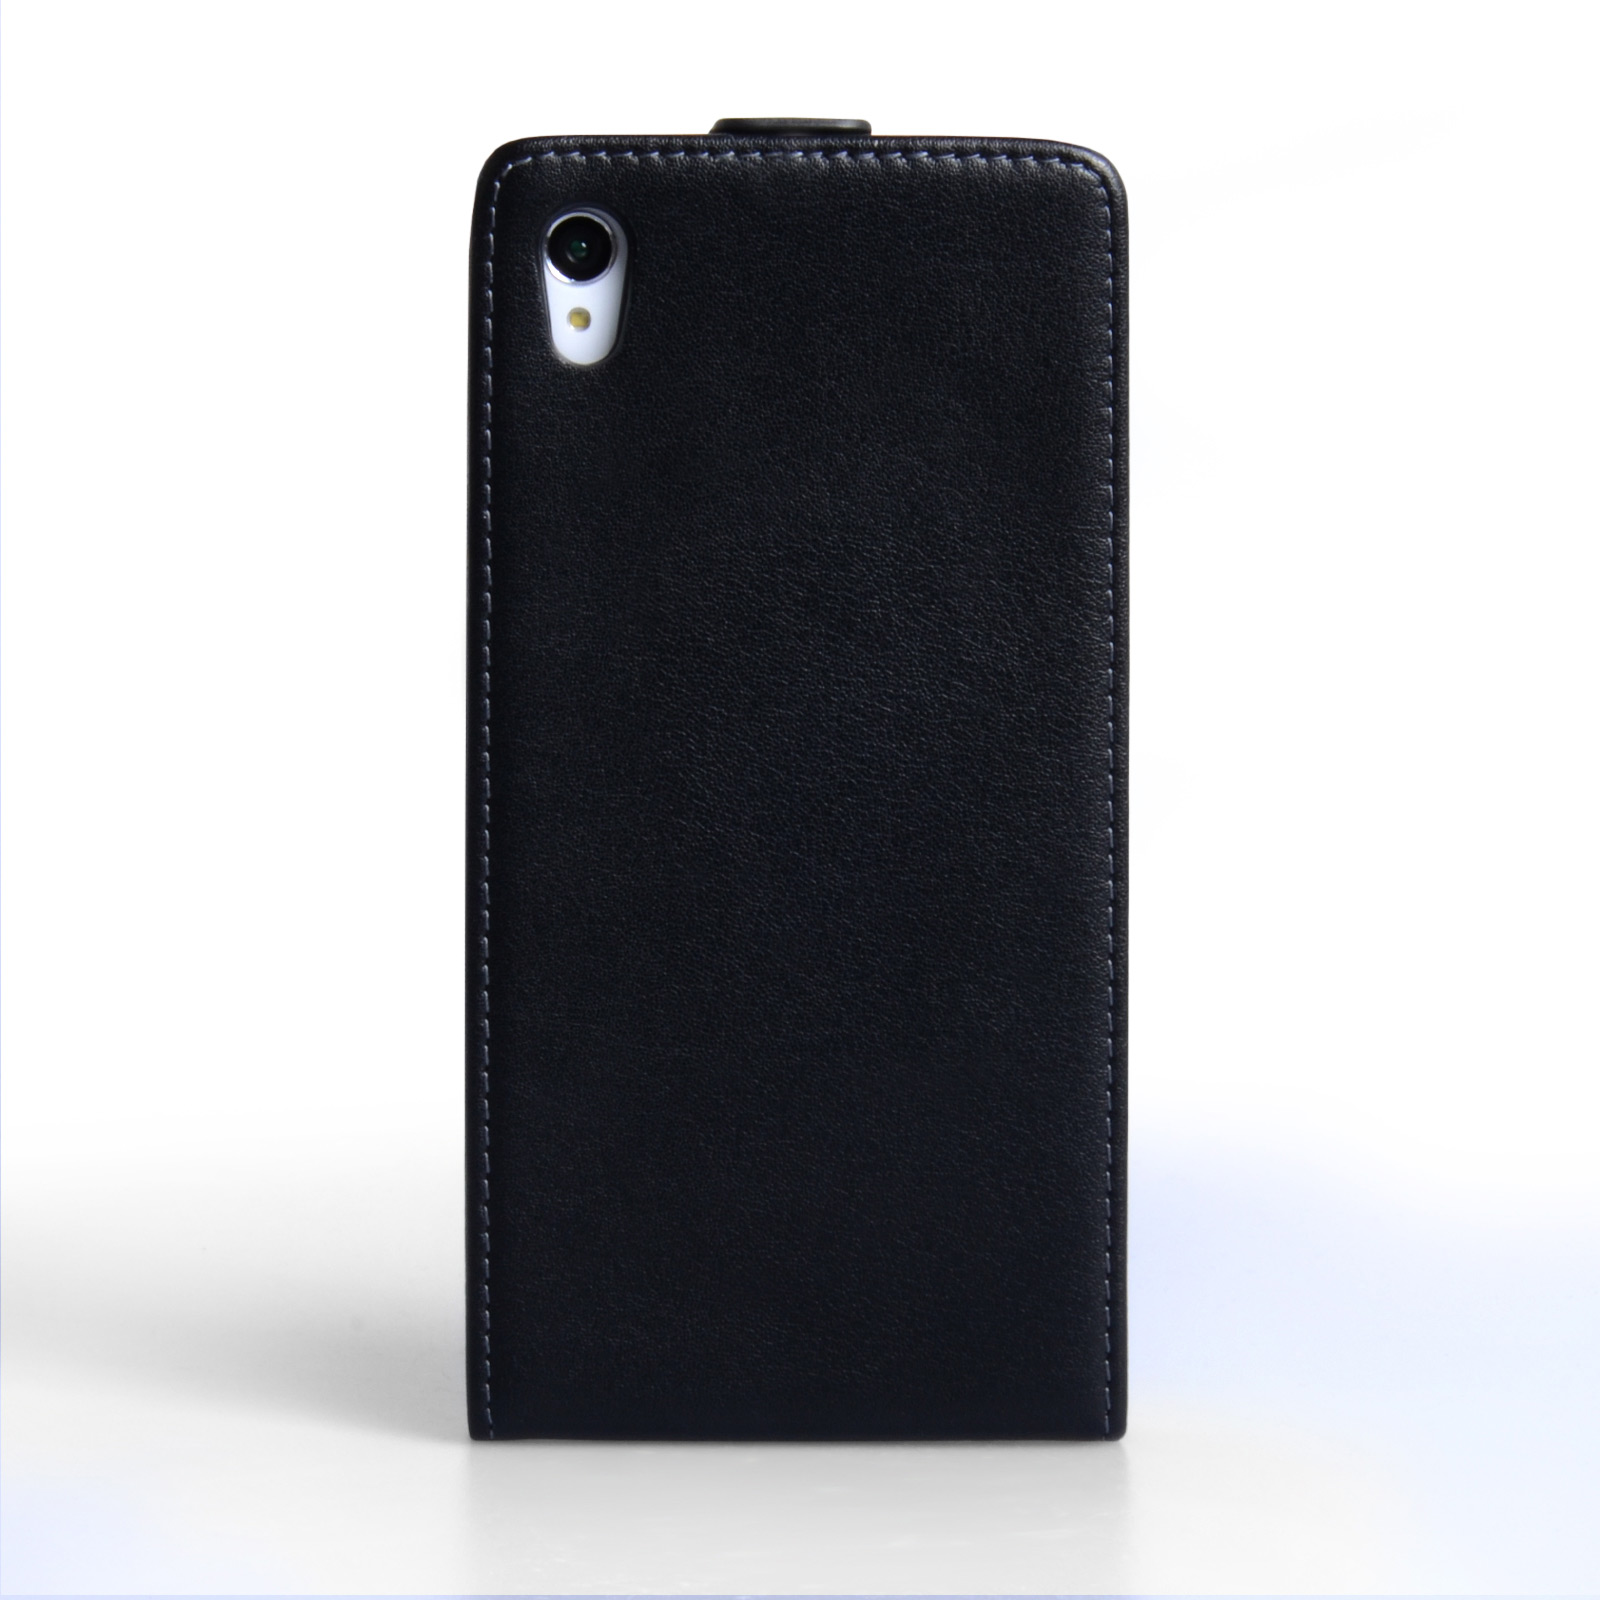 Caseflex Sony Xperia Z2 Real Leather Flip Case - Black